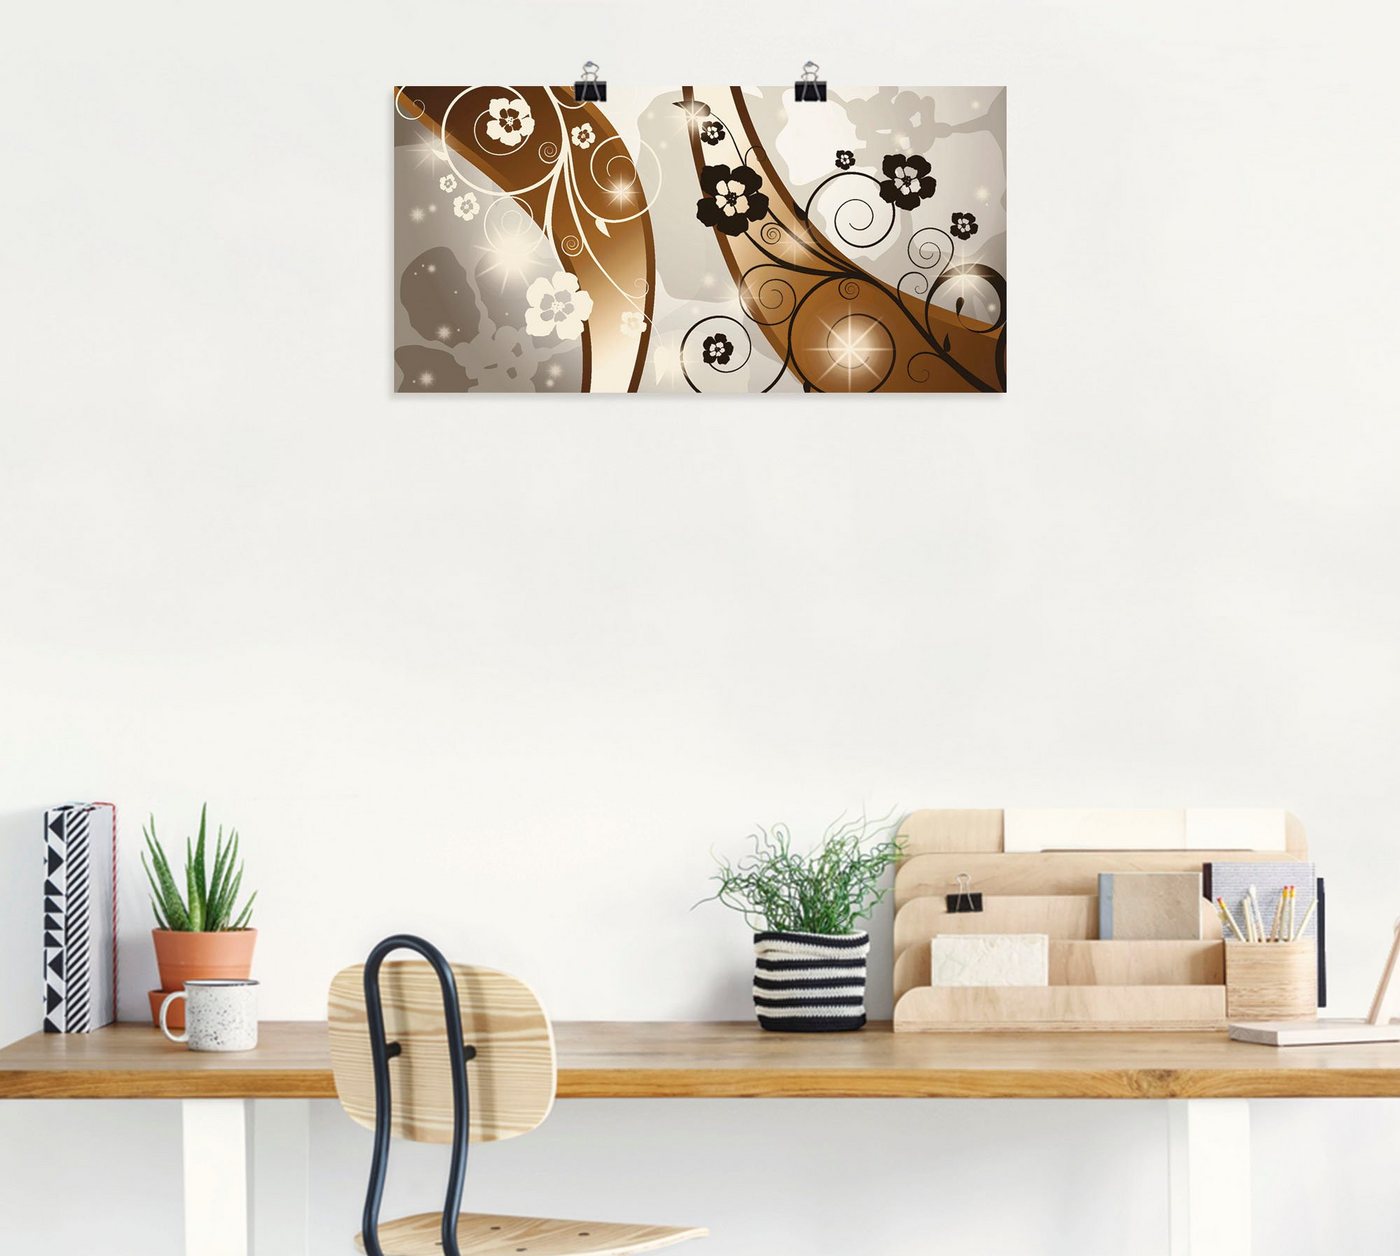 Artland Wandbild »Braune Wirbel mit Blumen«, Muster (1 Stück), in vielen Größen & Produktarten -Leinwandbild, Poster, Wandaufkleber / Wandtattoo auch für Badezimmer geeignet-HomeTrends